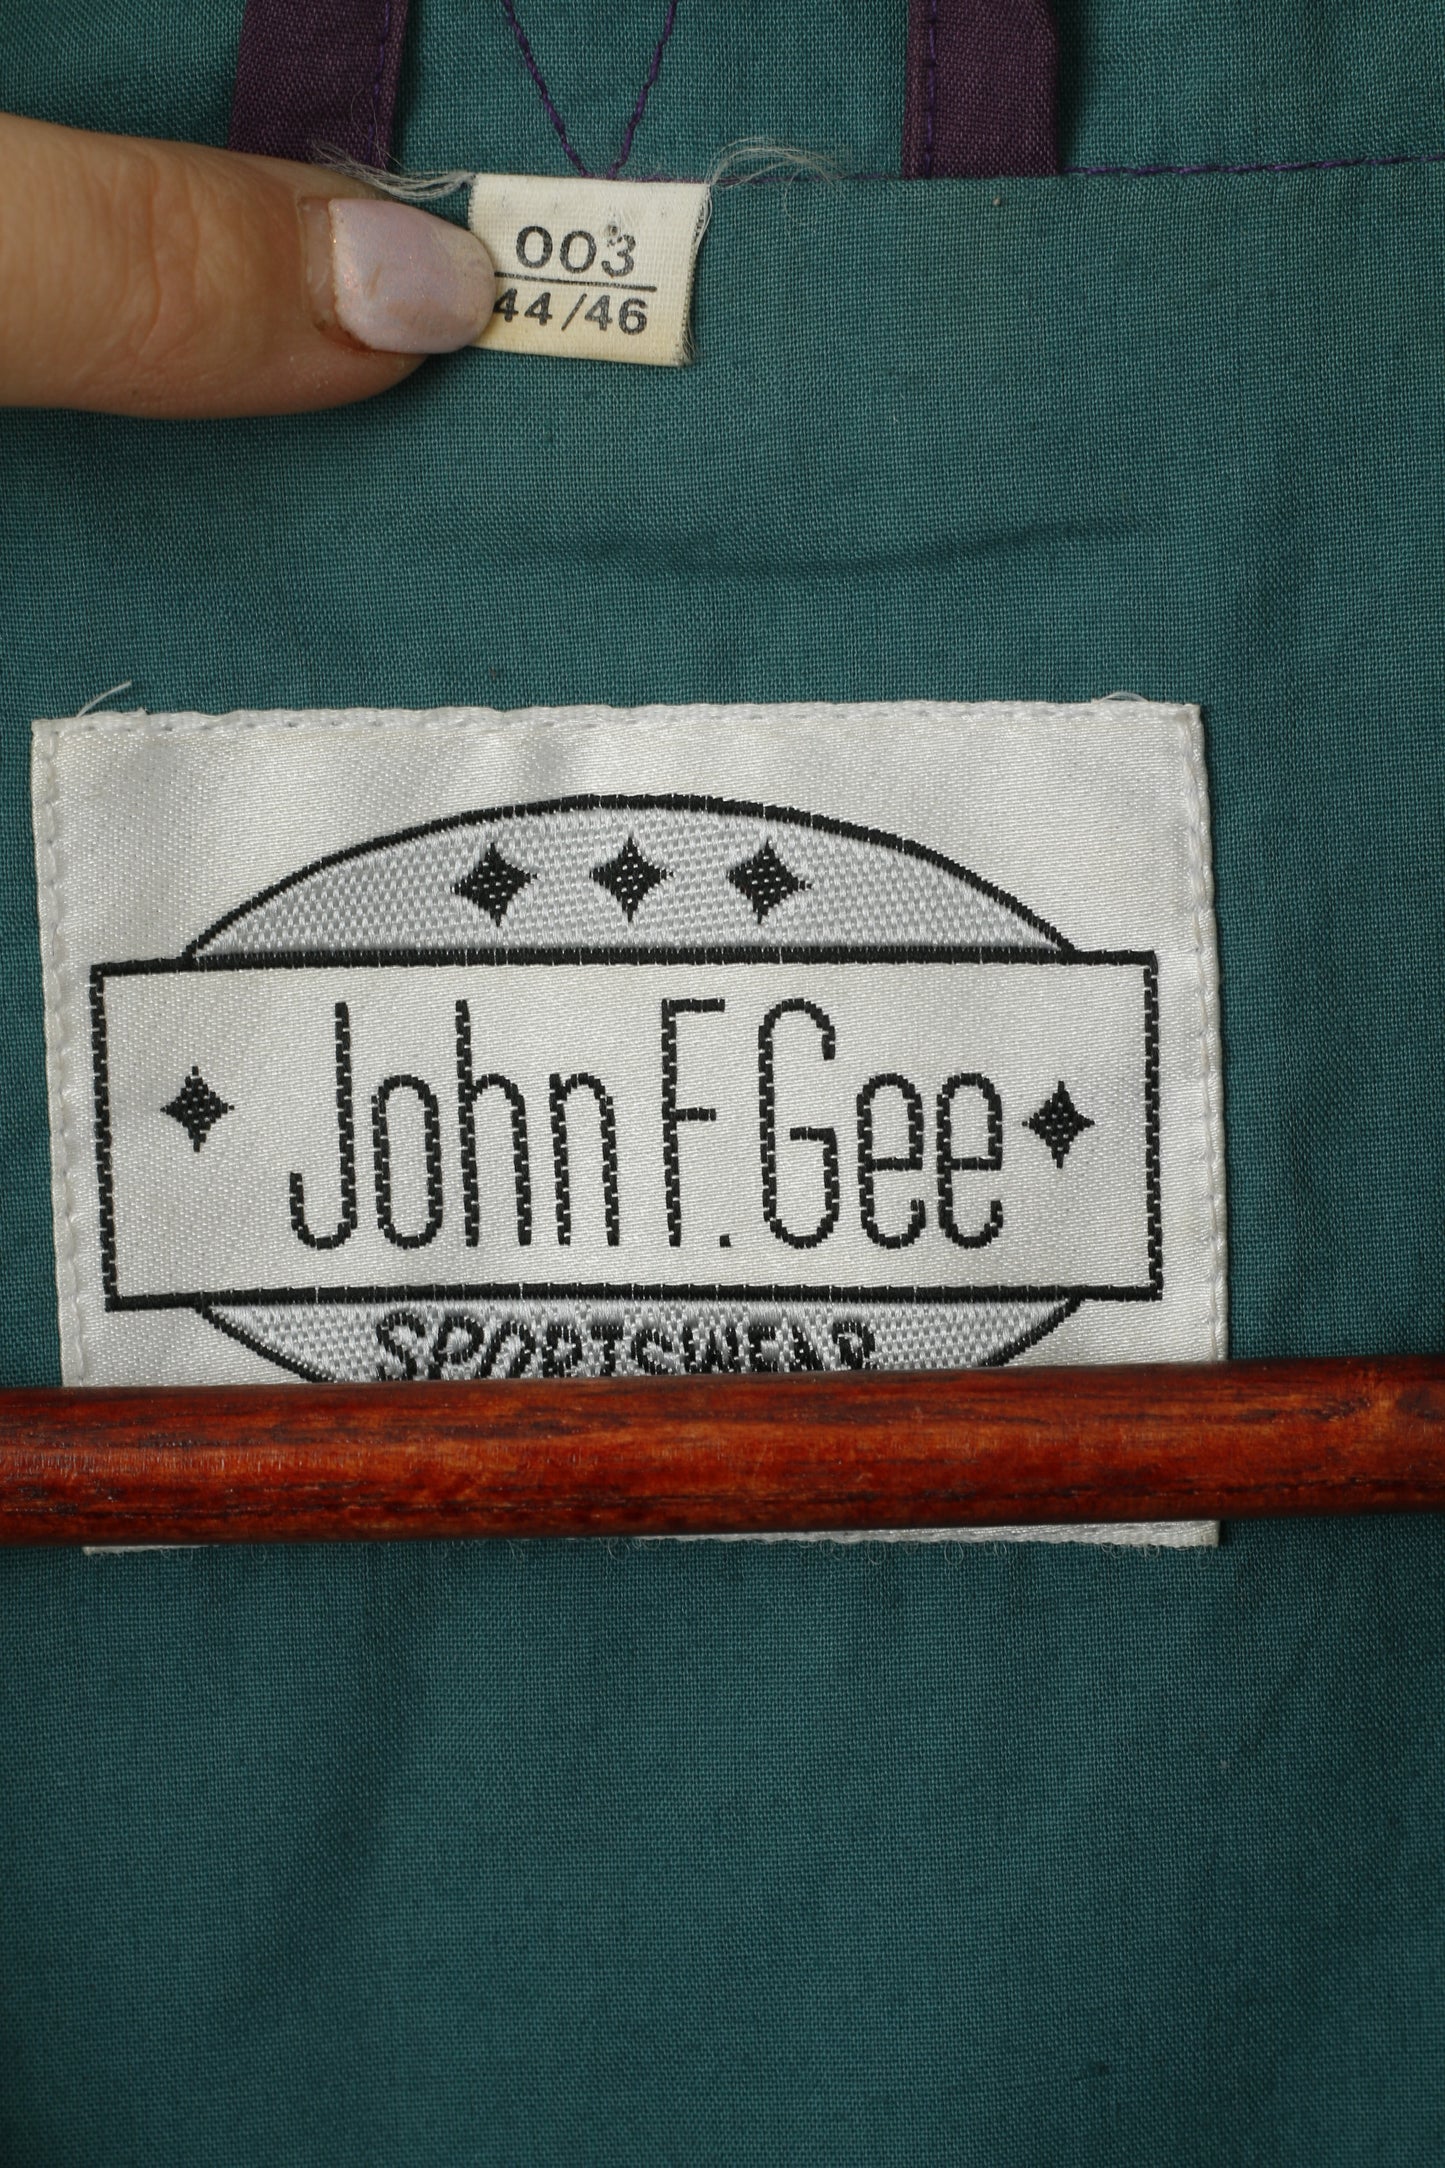 John F.Gee Men 44/46 S Jacket Purple Vintage Kangaroo Pocket Nylon Waterproof Top